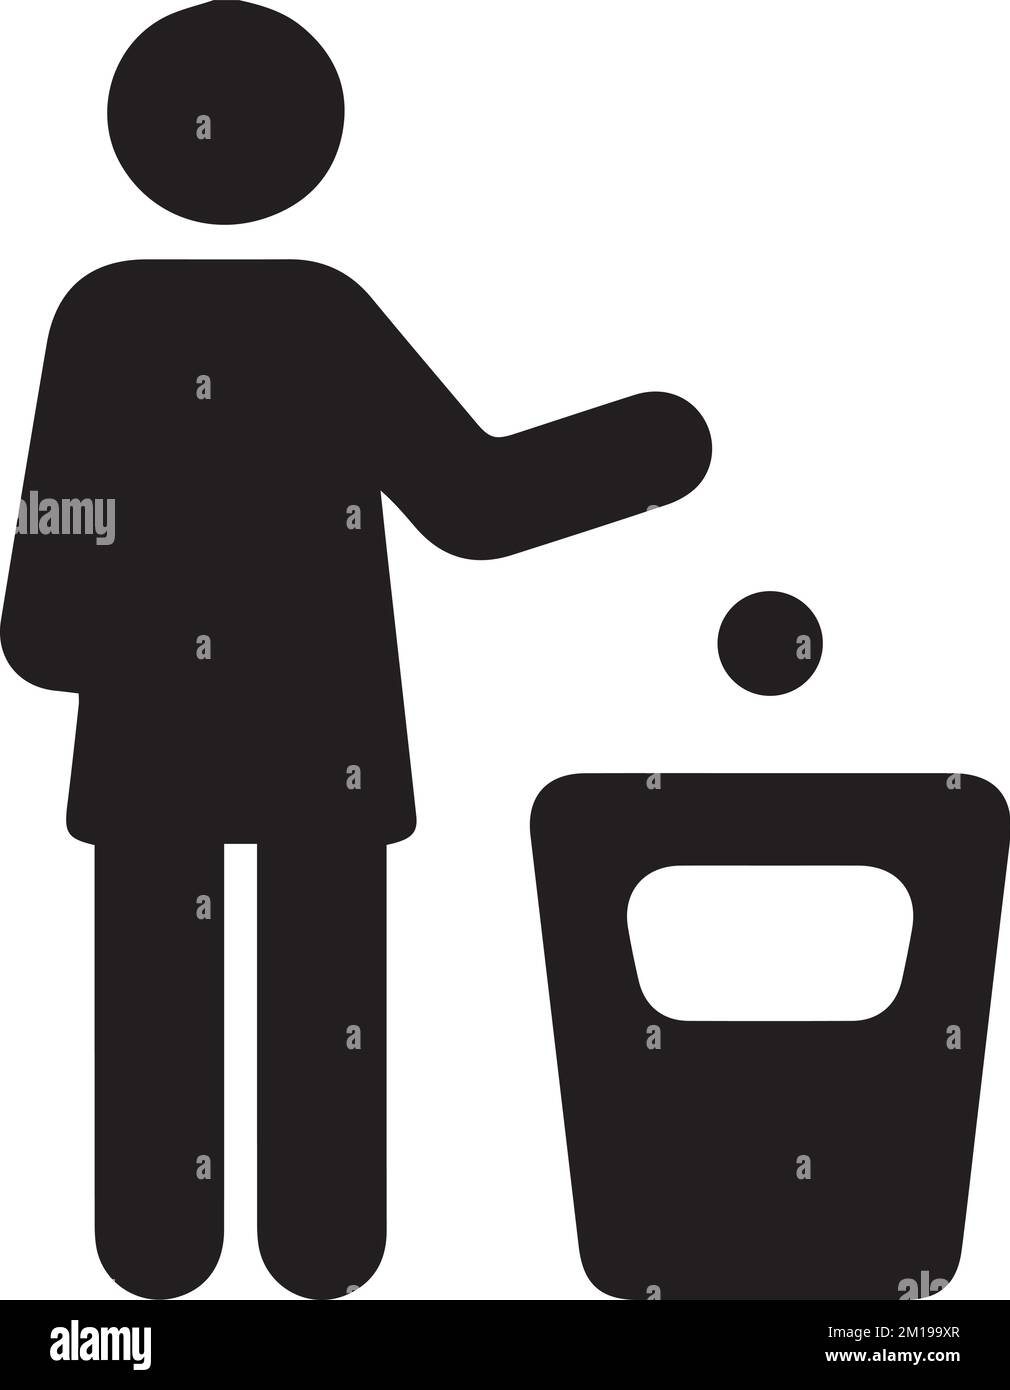 Litter Sign Symbol, Rubbish Bins, Waste Paper Baskets, Recycling symbol, Recycling bin, rubbish recycling icon Stock Vector